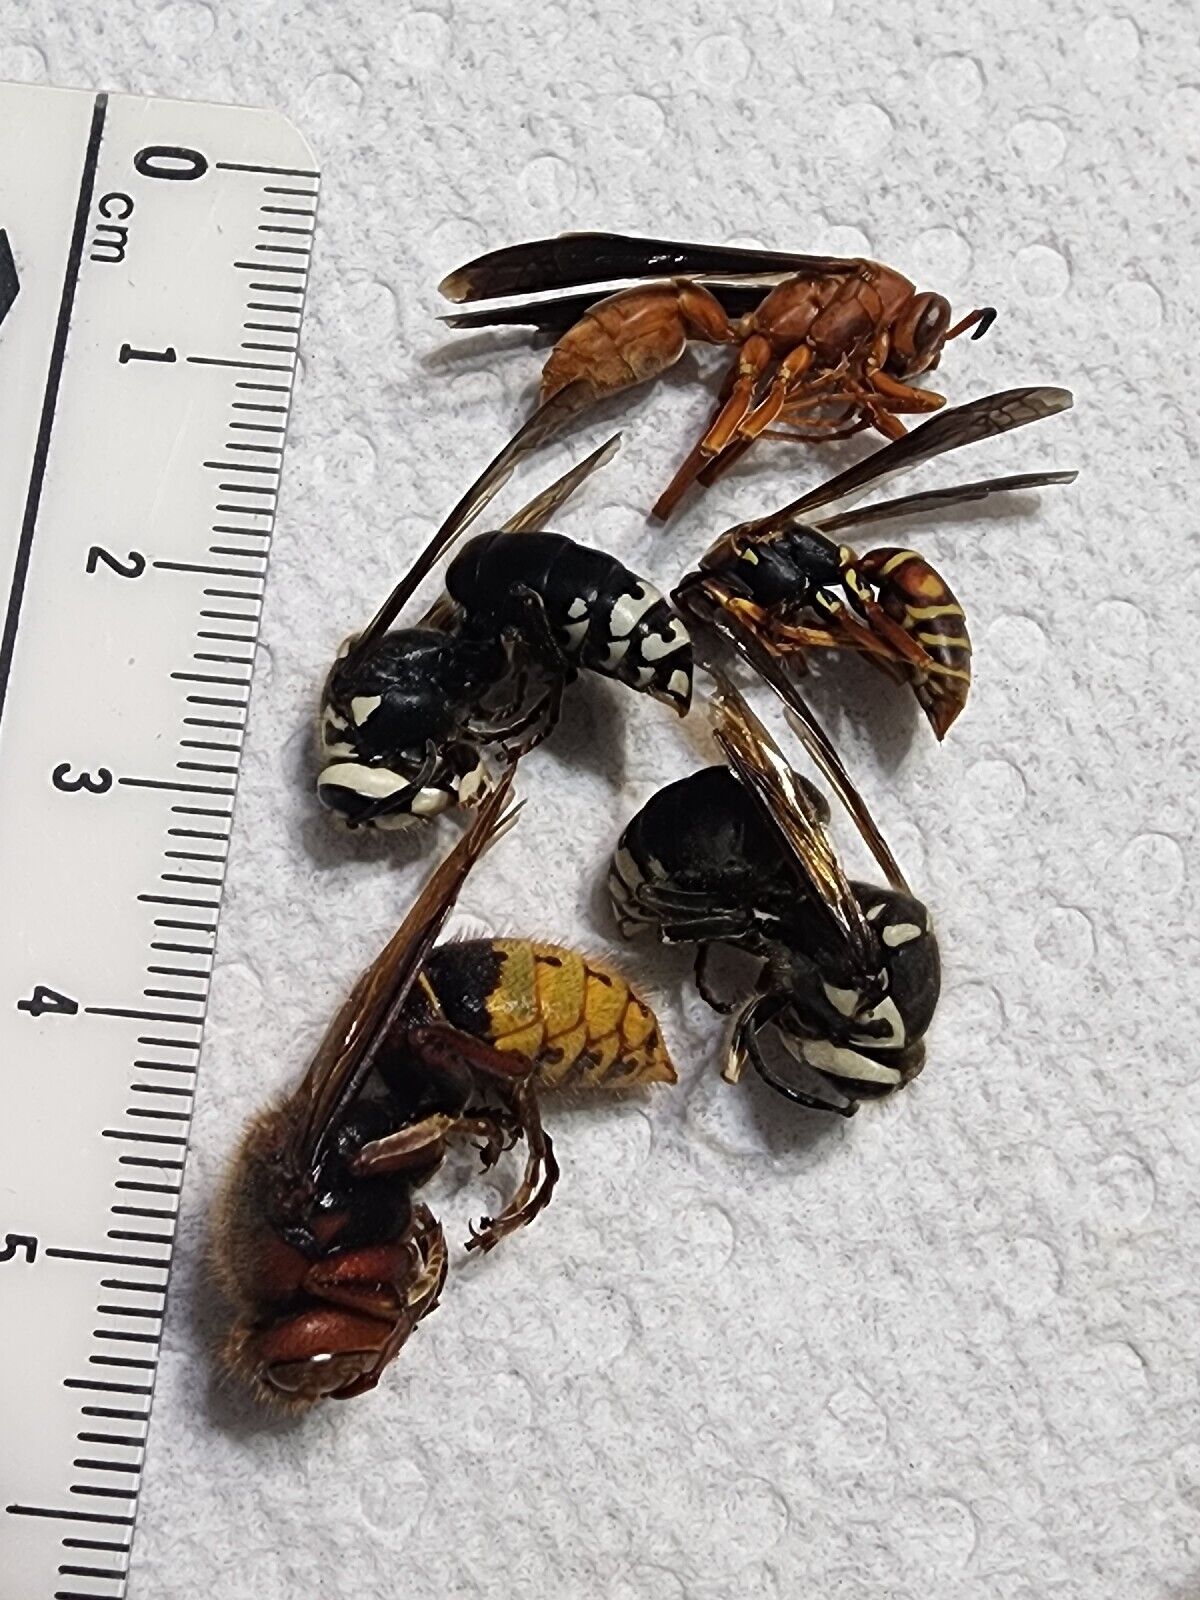 Mixed Hymenoptera from Kentucky Vespa Polistes 5 Hornets Wasps Insect Pepsis